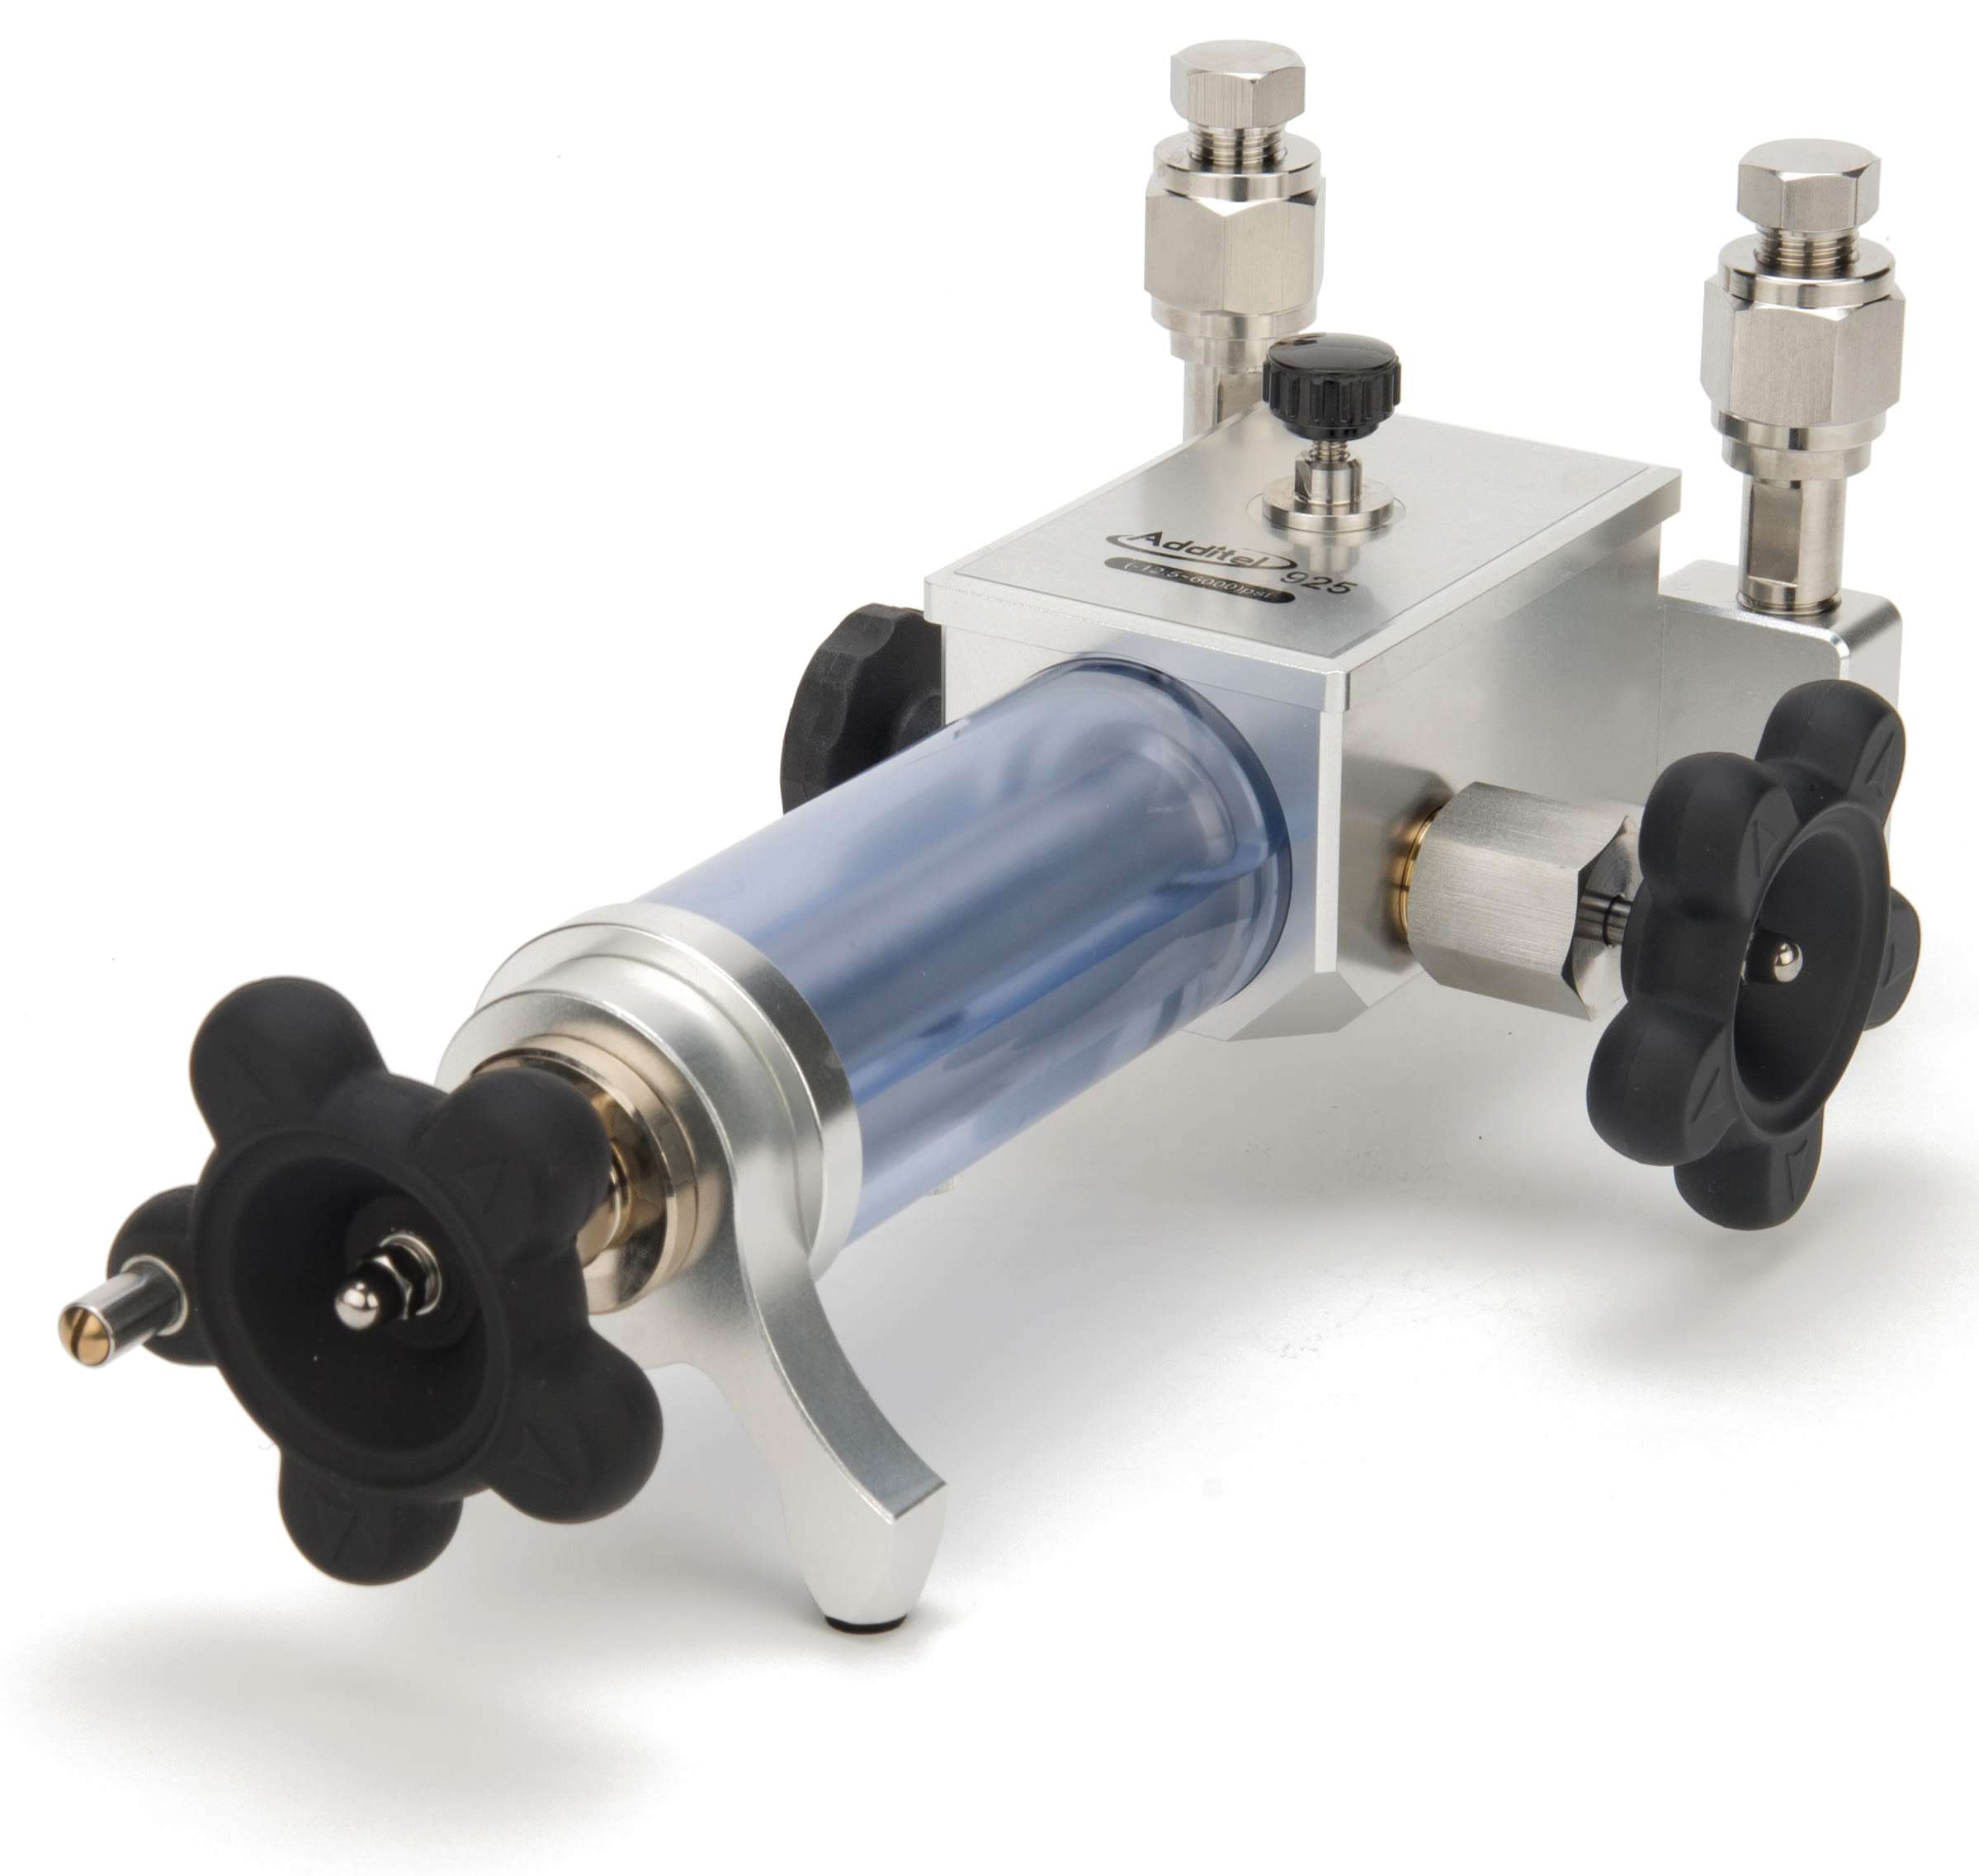 Additel 925 Hydraulic Pressure Test Pump & Gauge